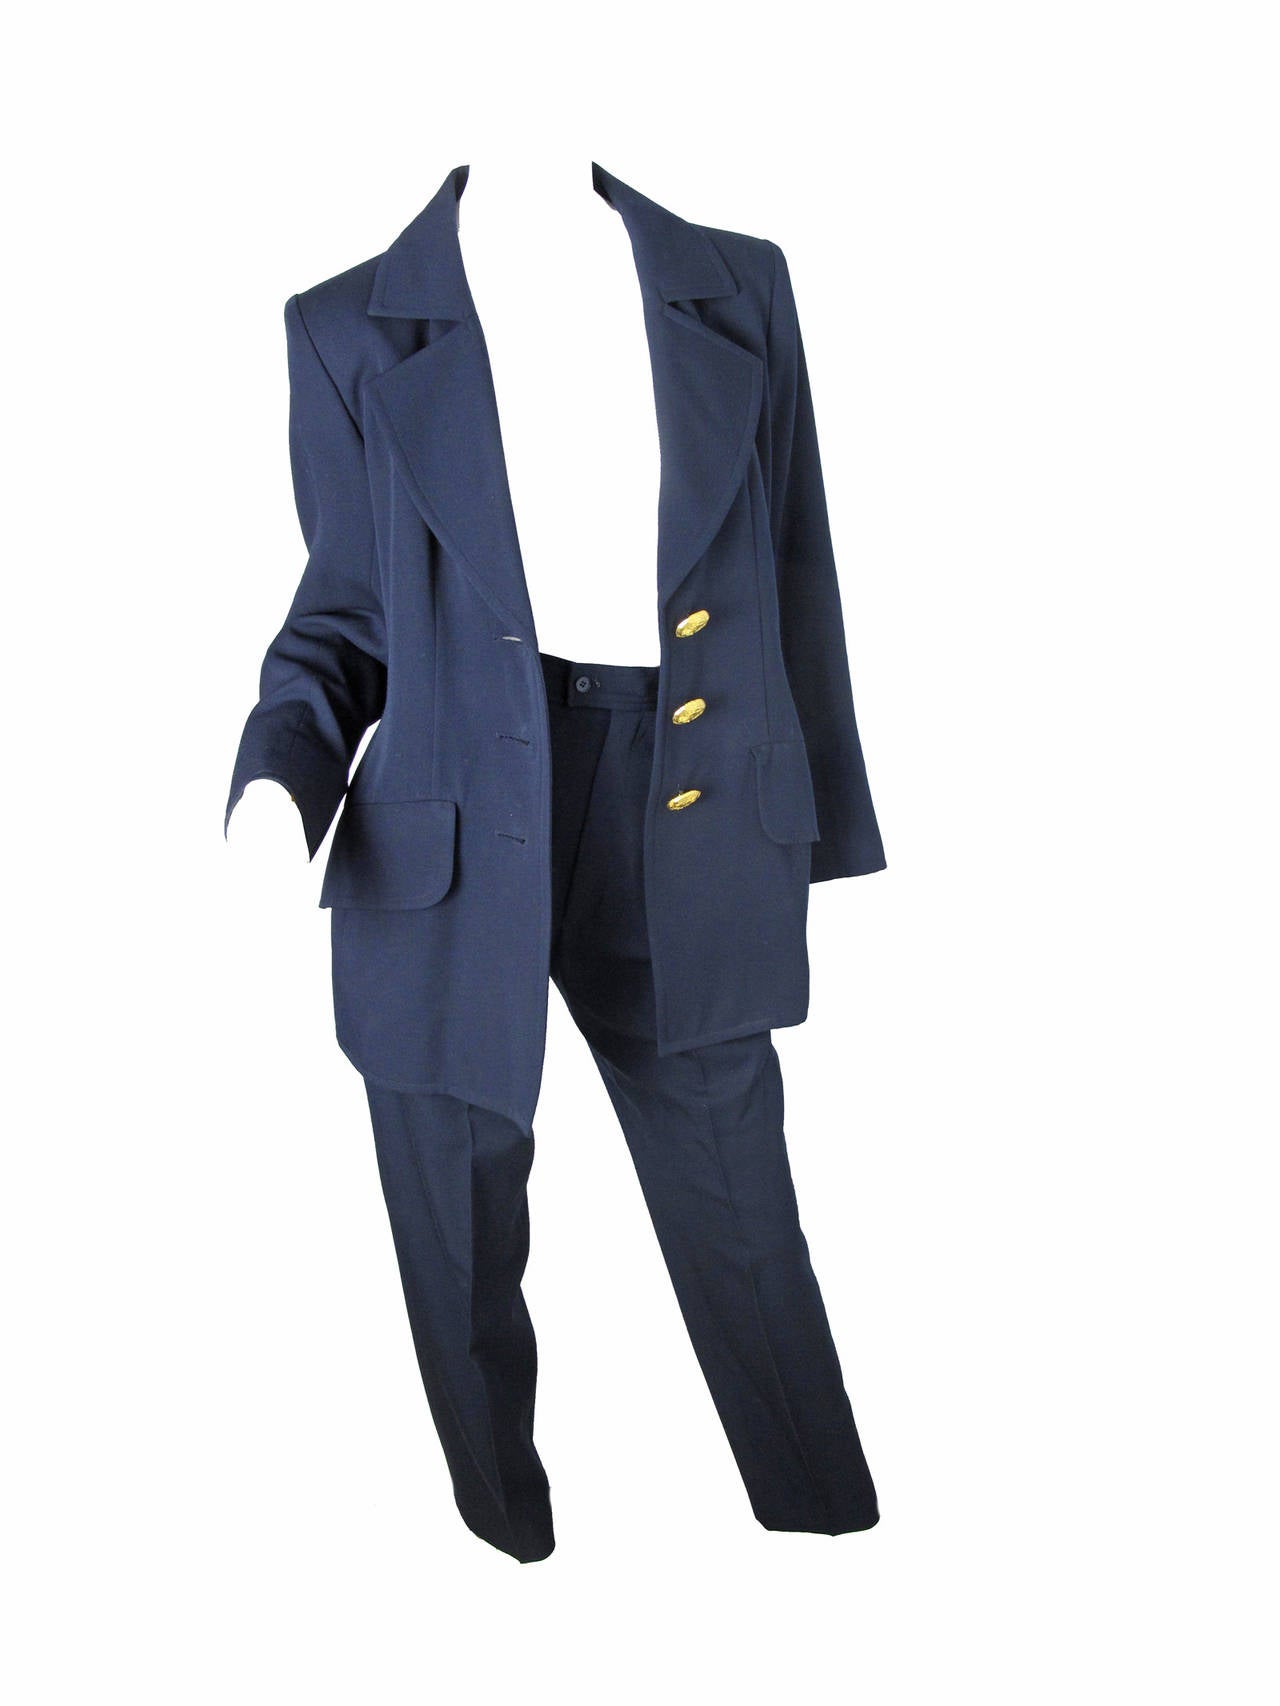 Yves Saint Laurent Rive Gauche Navy Suit In Excellent Condition In Austin, TX